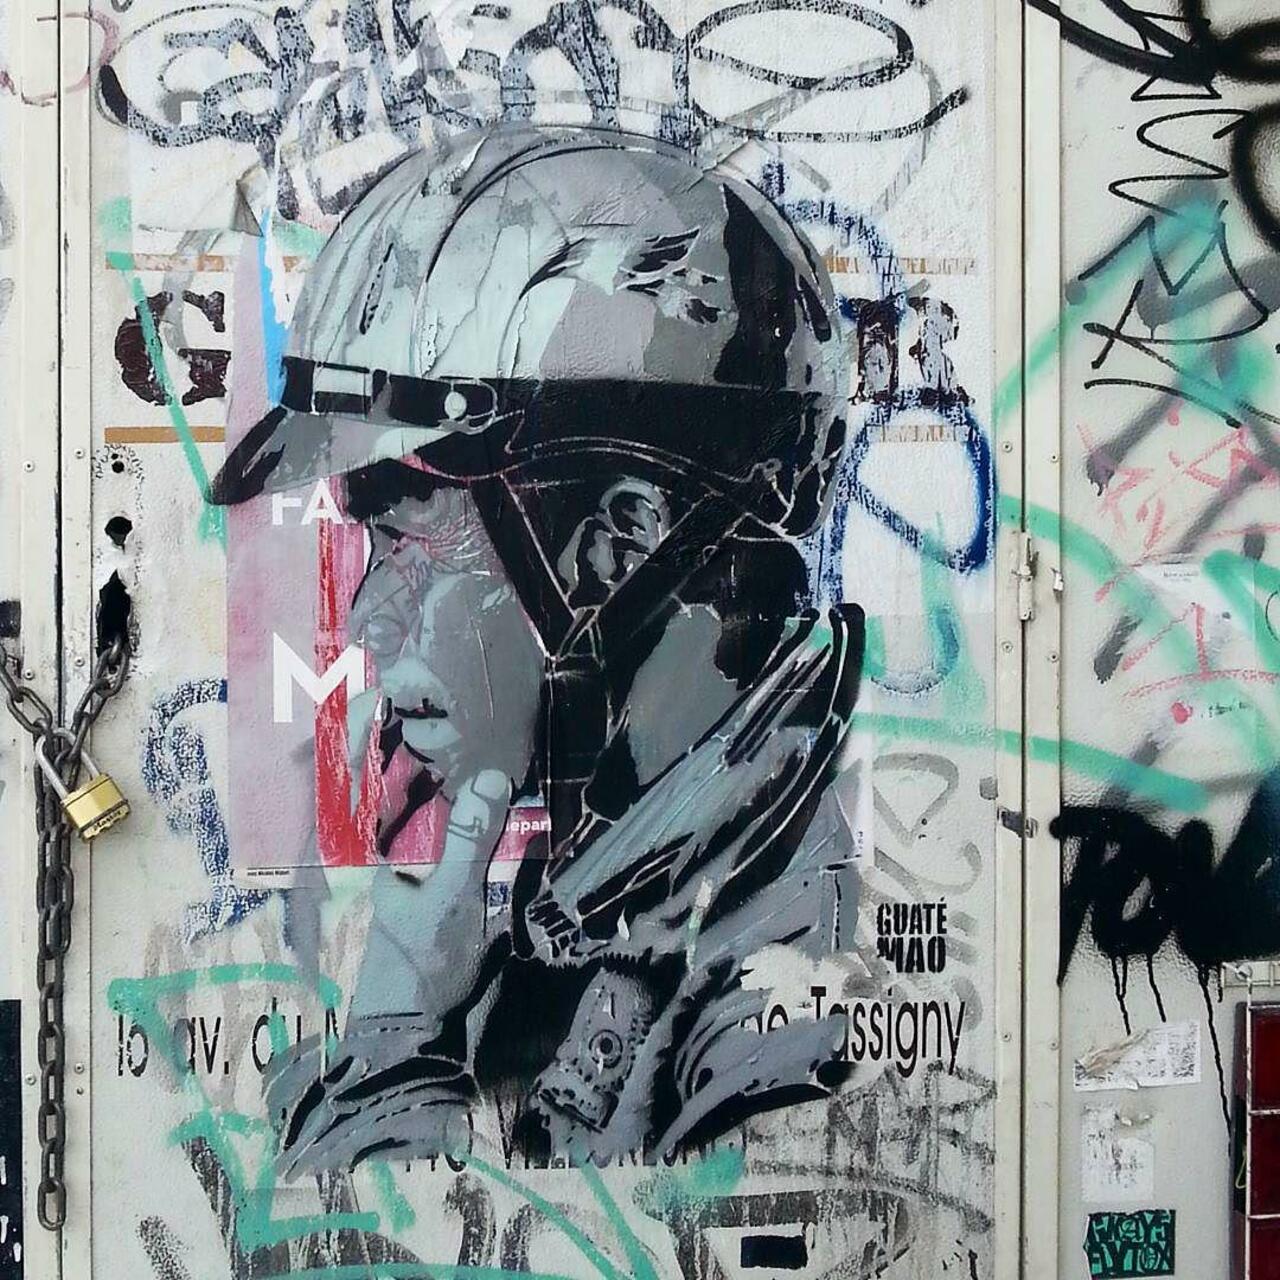 #Paris #graffiti photo by @fotoflaneuse http://ift.tt/1jbboqz #StreetArt http://t.co/YUw4puxTUh